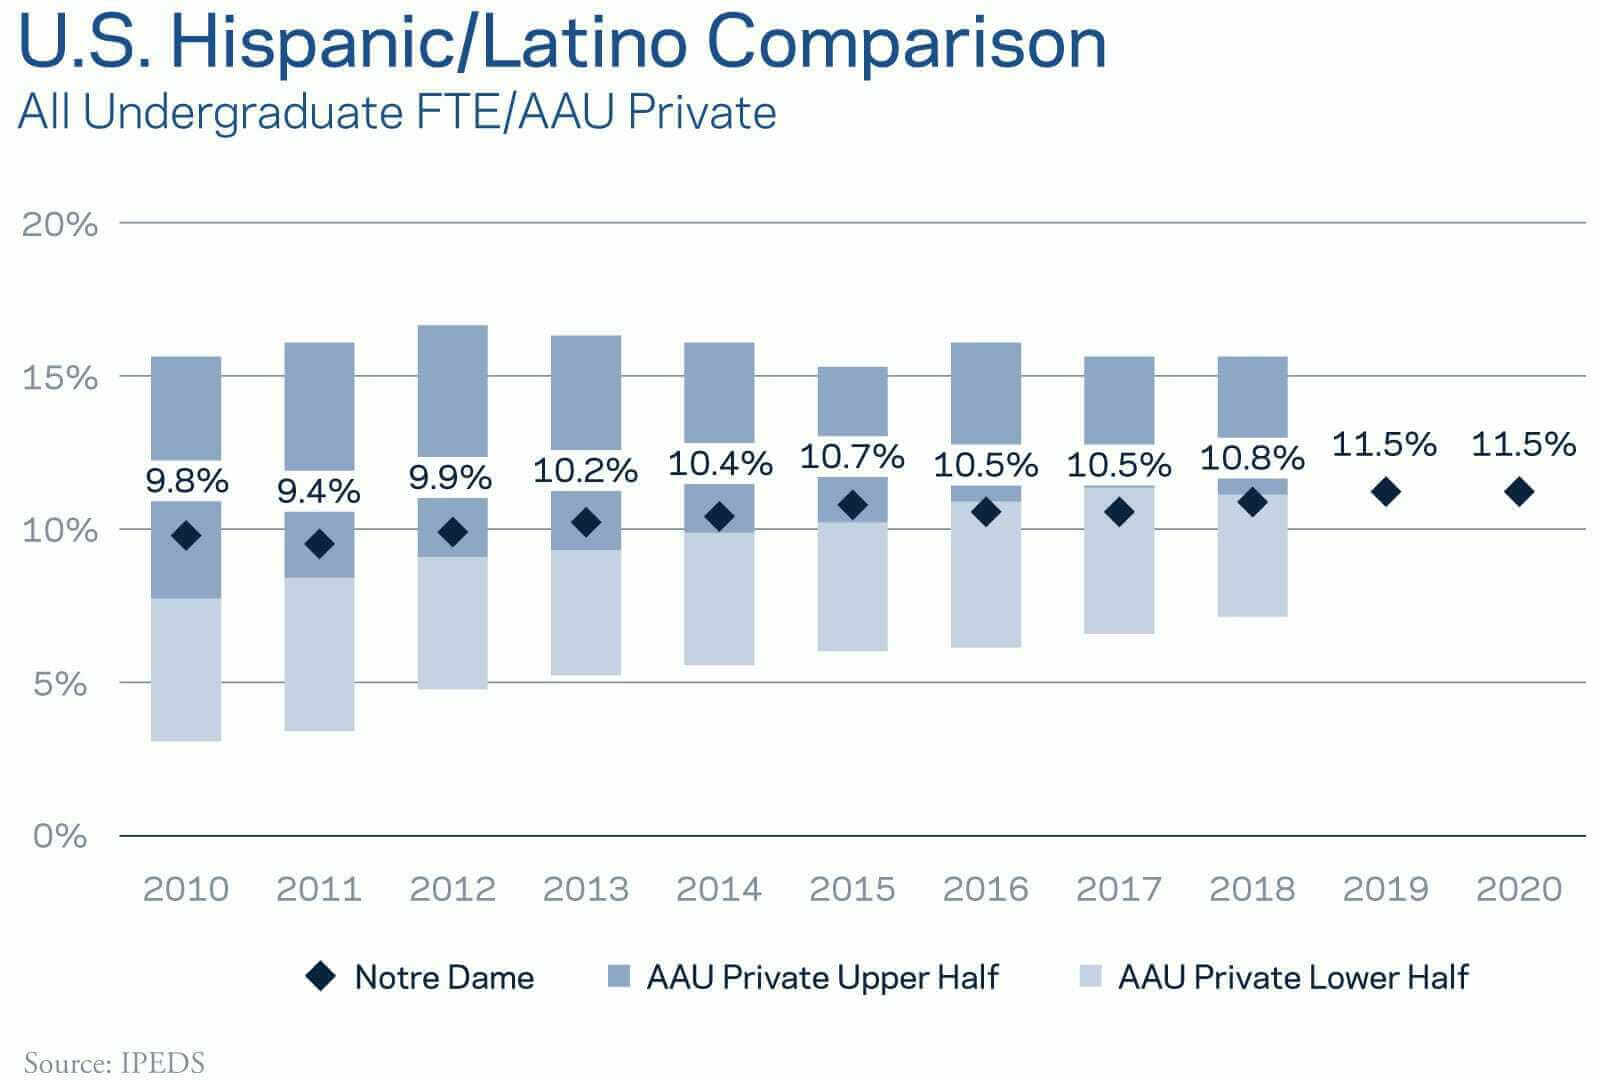 U.S. Hispanic/Latino Comparison - All Undergraduate FTE/AAU Private